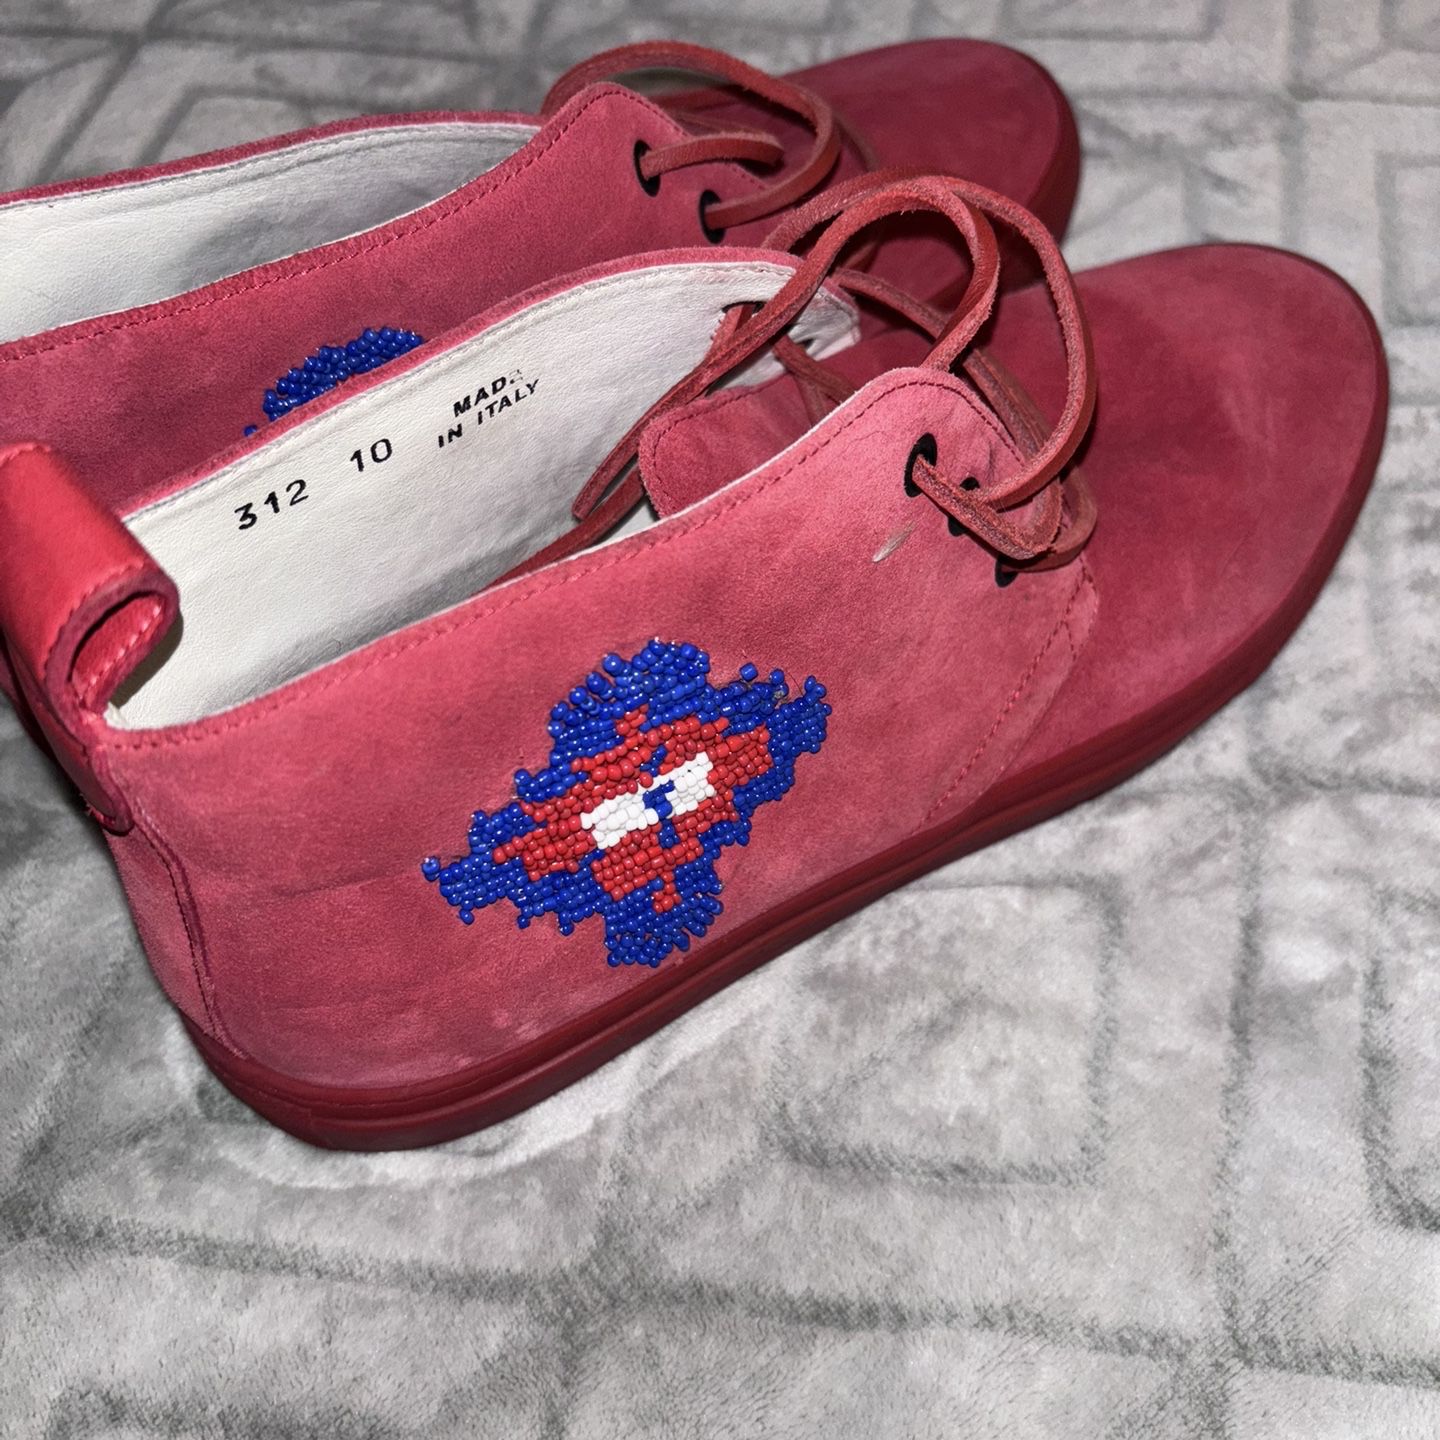 Red Suede Del Toro Handmade Italian Shoes